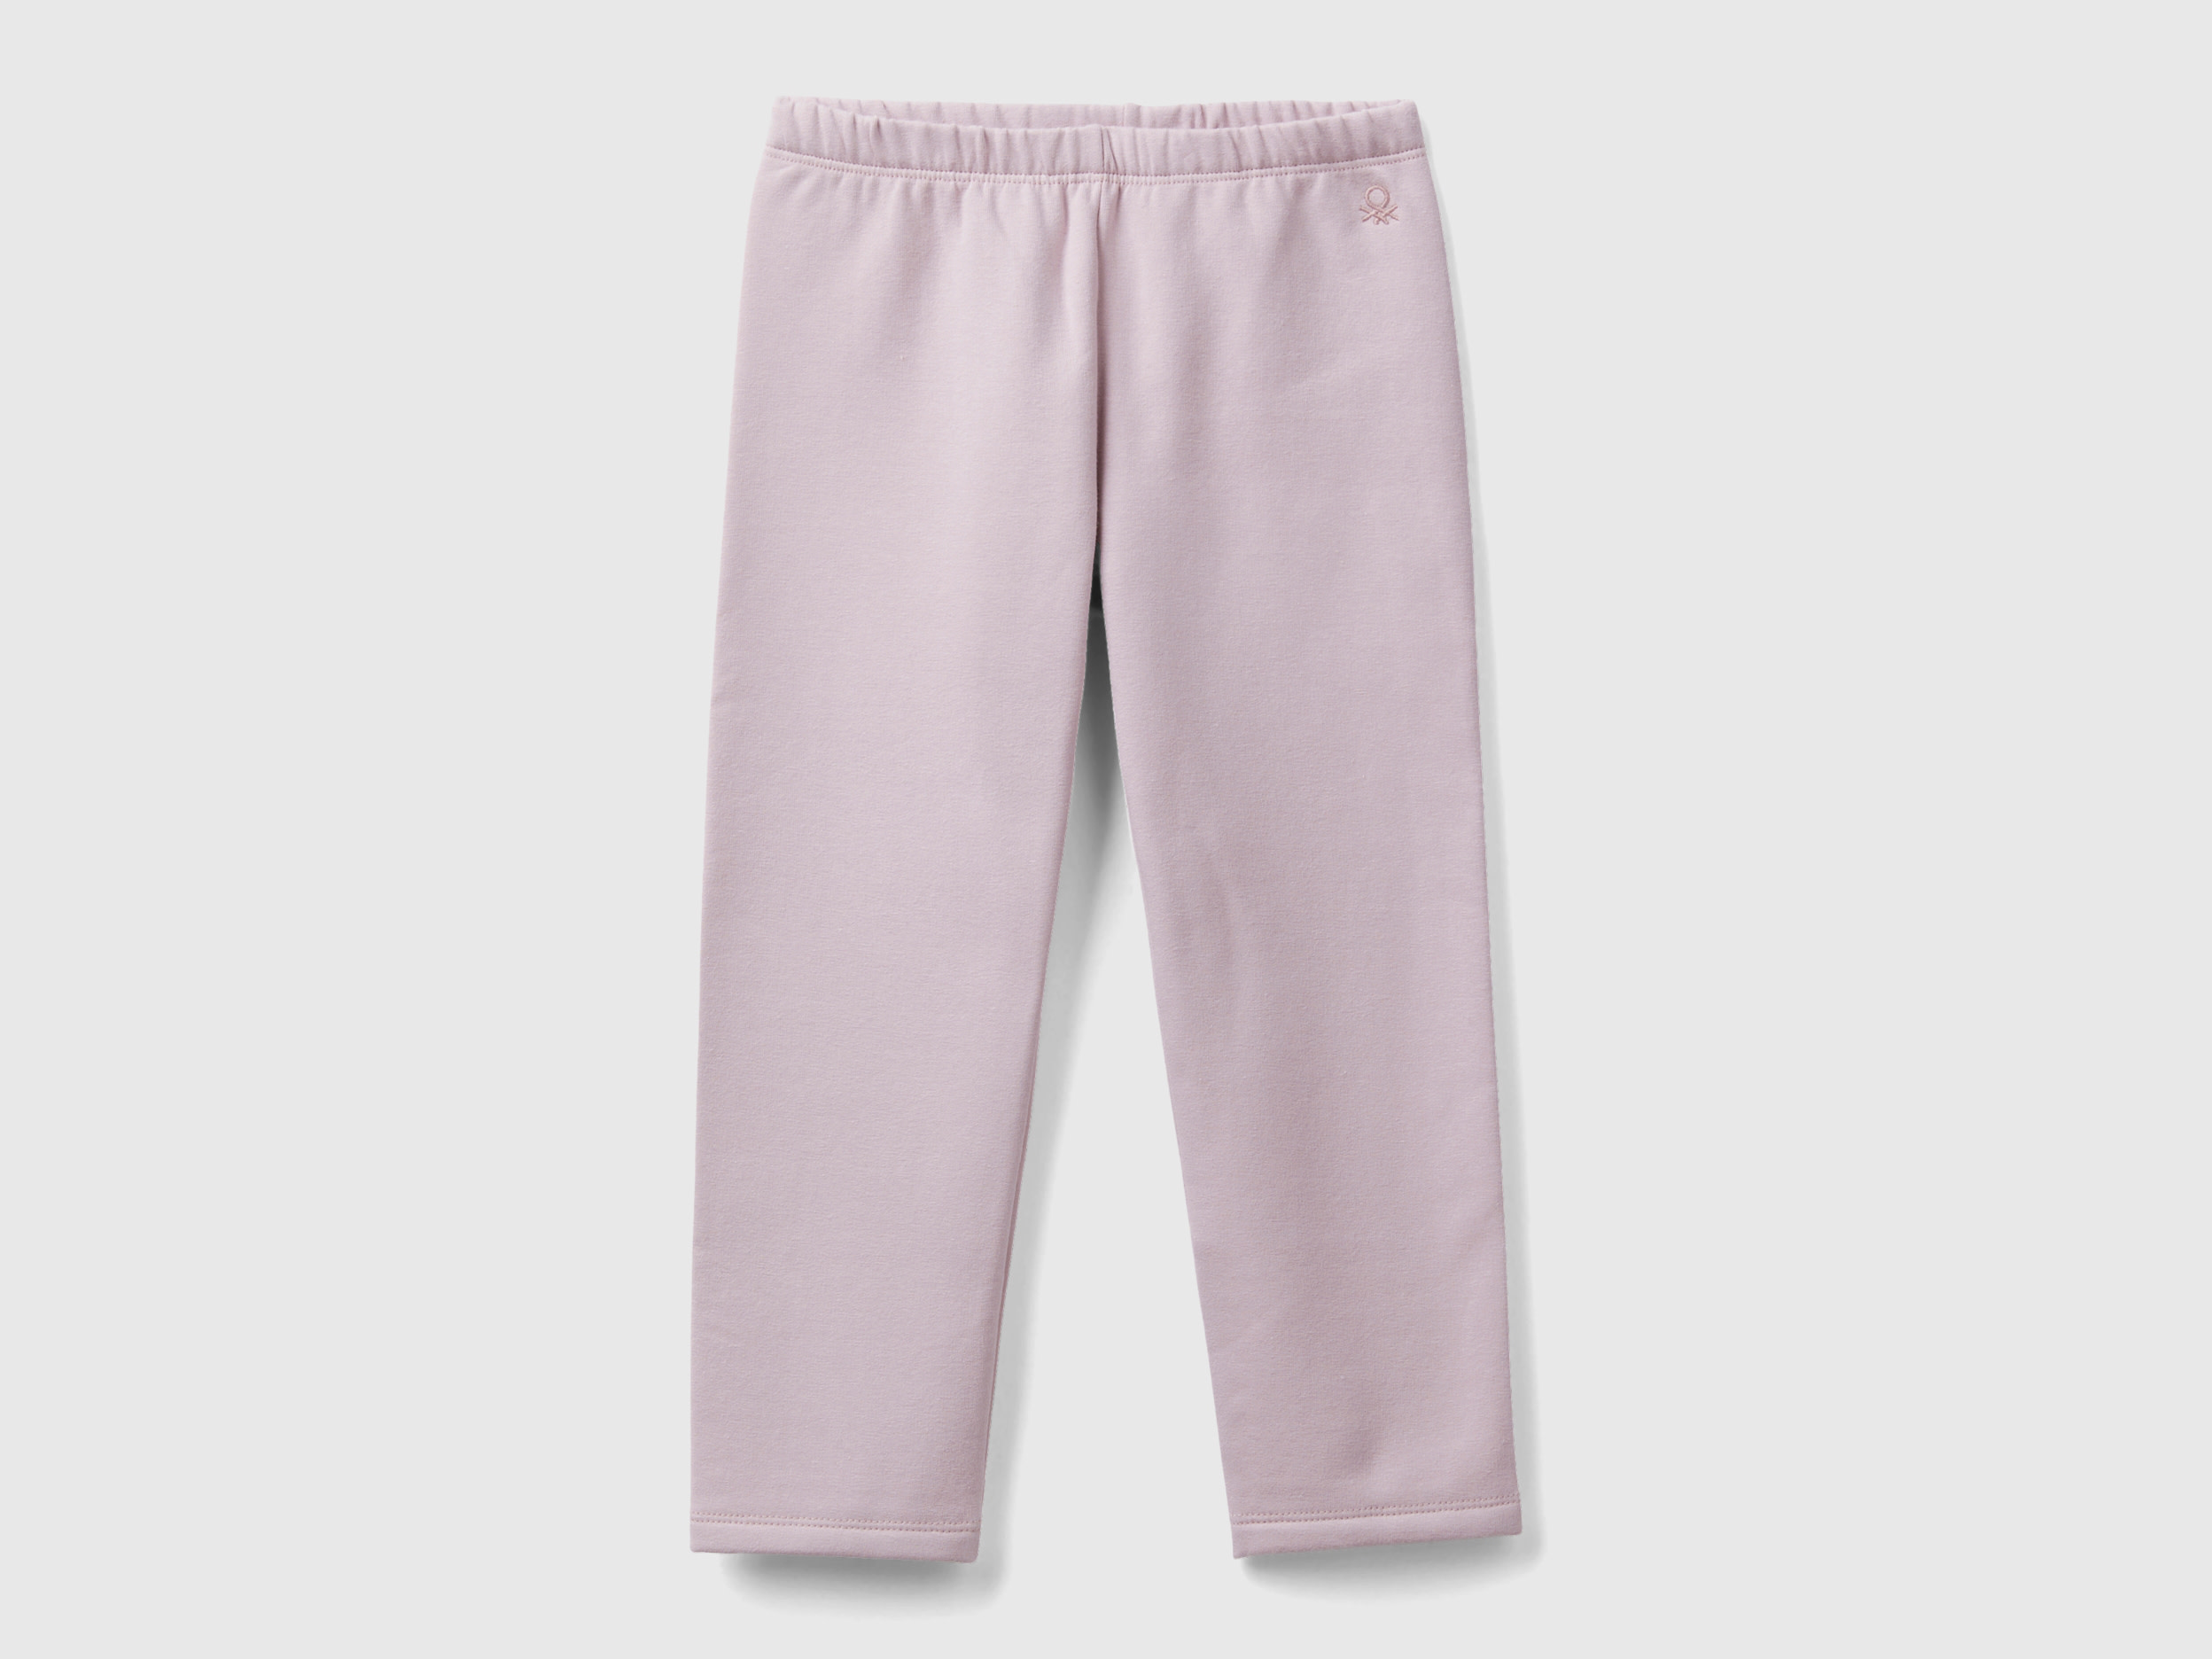 Benetton, Warm Sweat Leggings, size 18-24, Pink, Kids